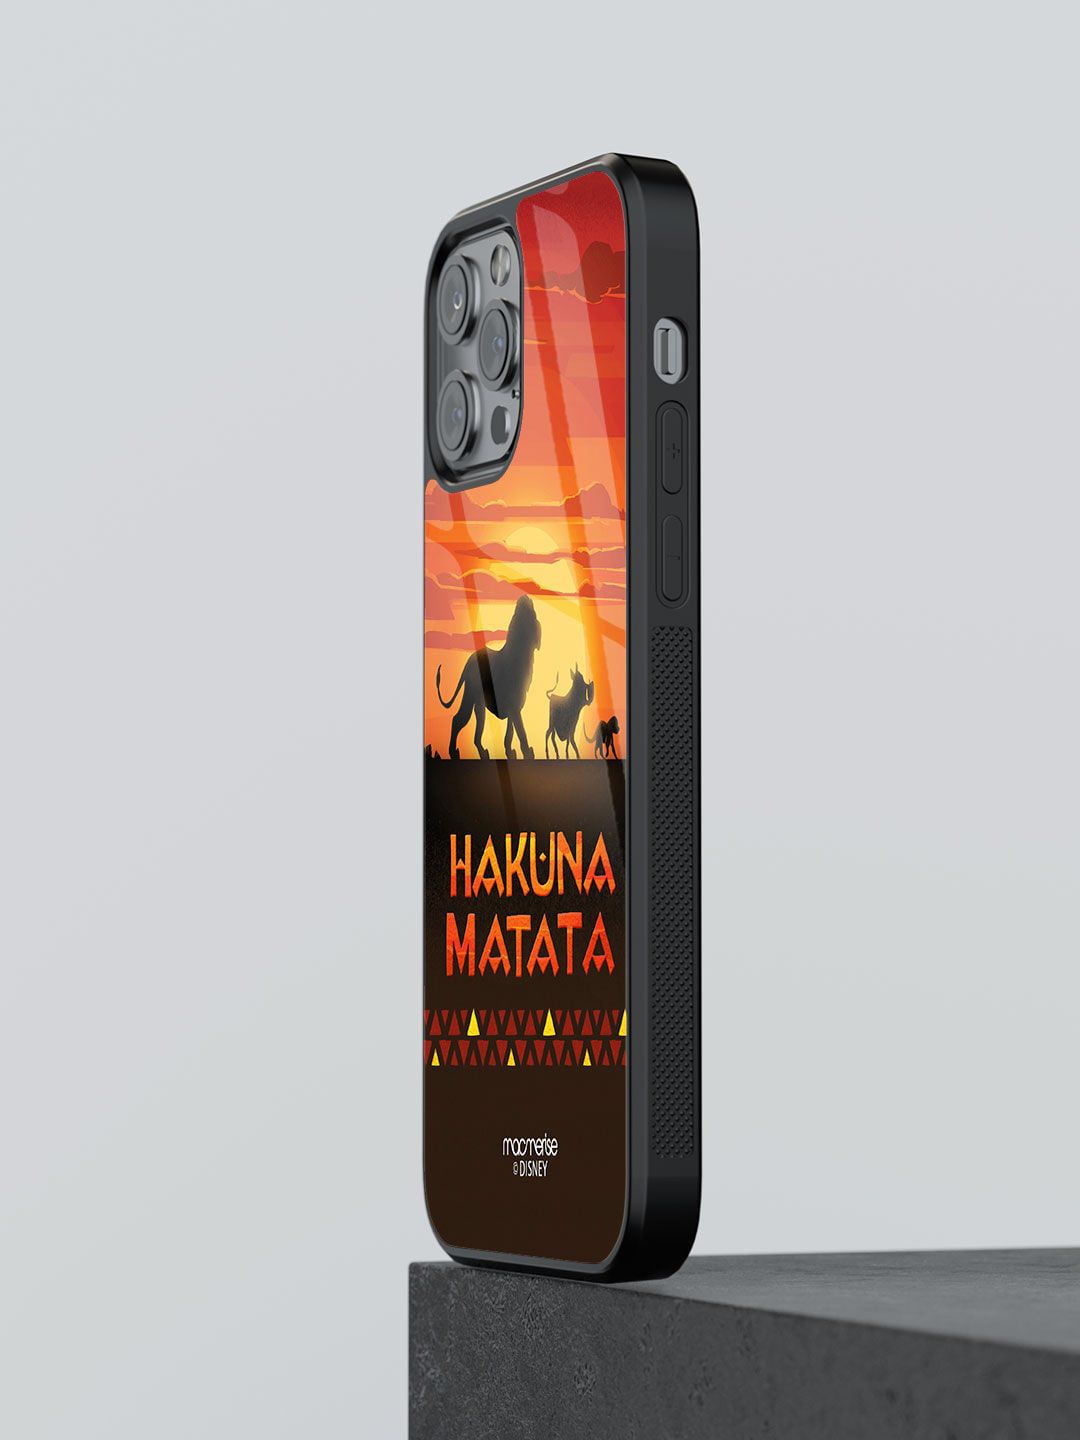 macmerise Brown & Yellow Hakuna Matata iPhone 13 Pro Max Mobile Phone Case Price in India